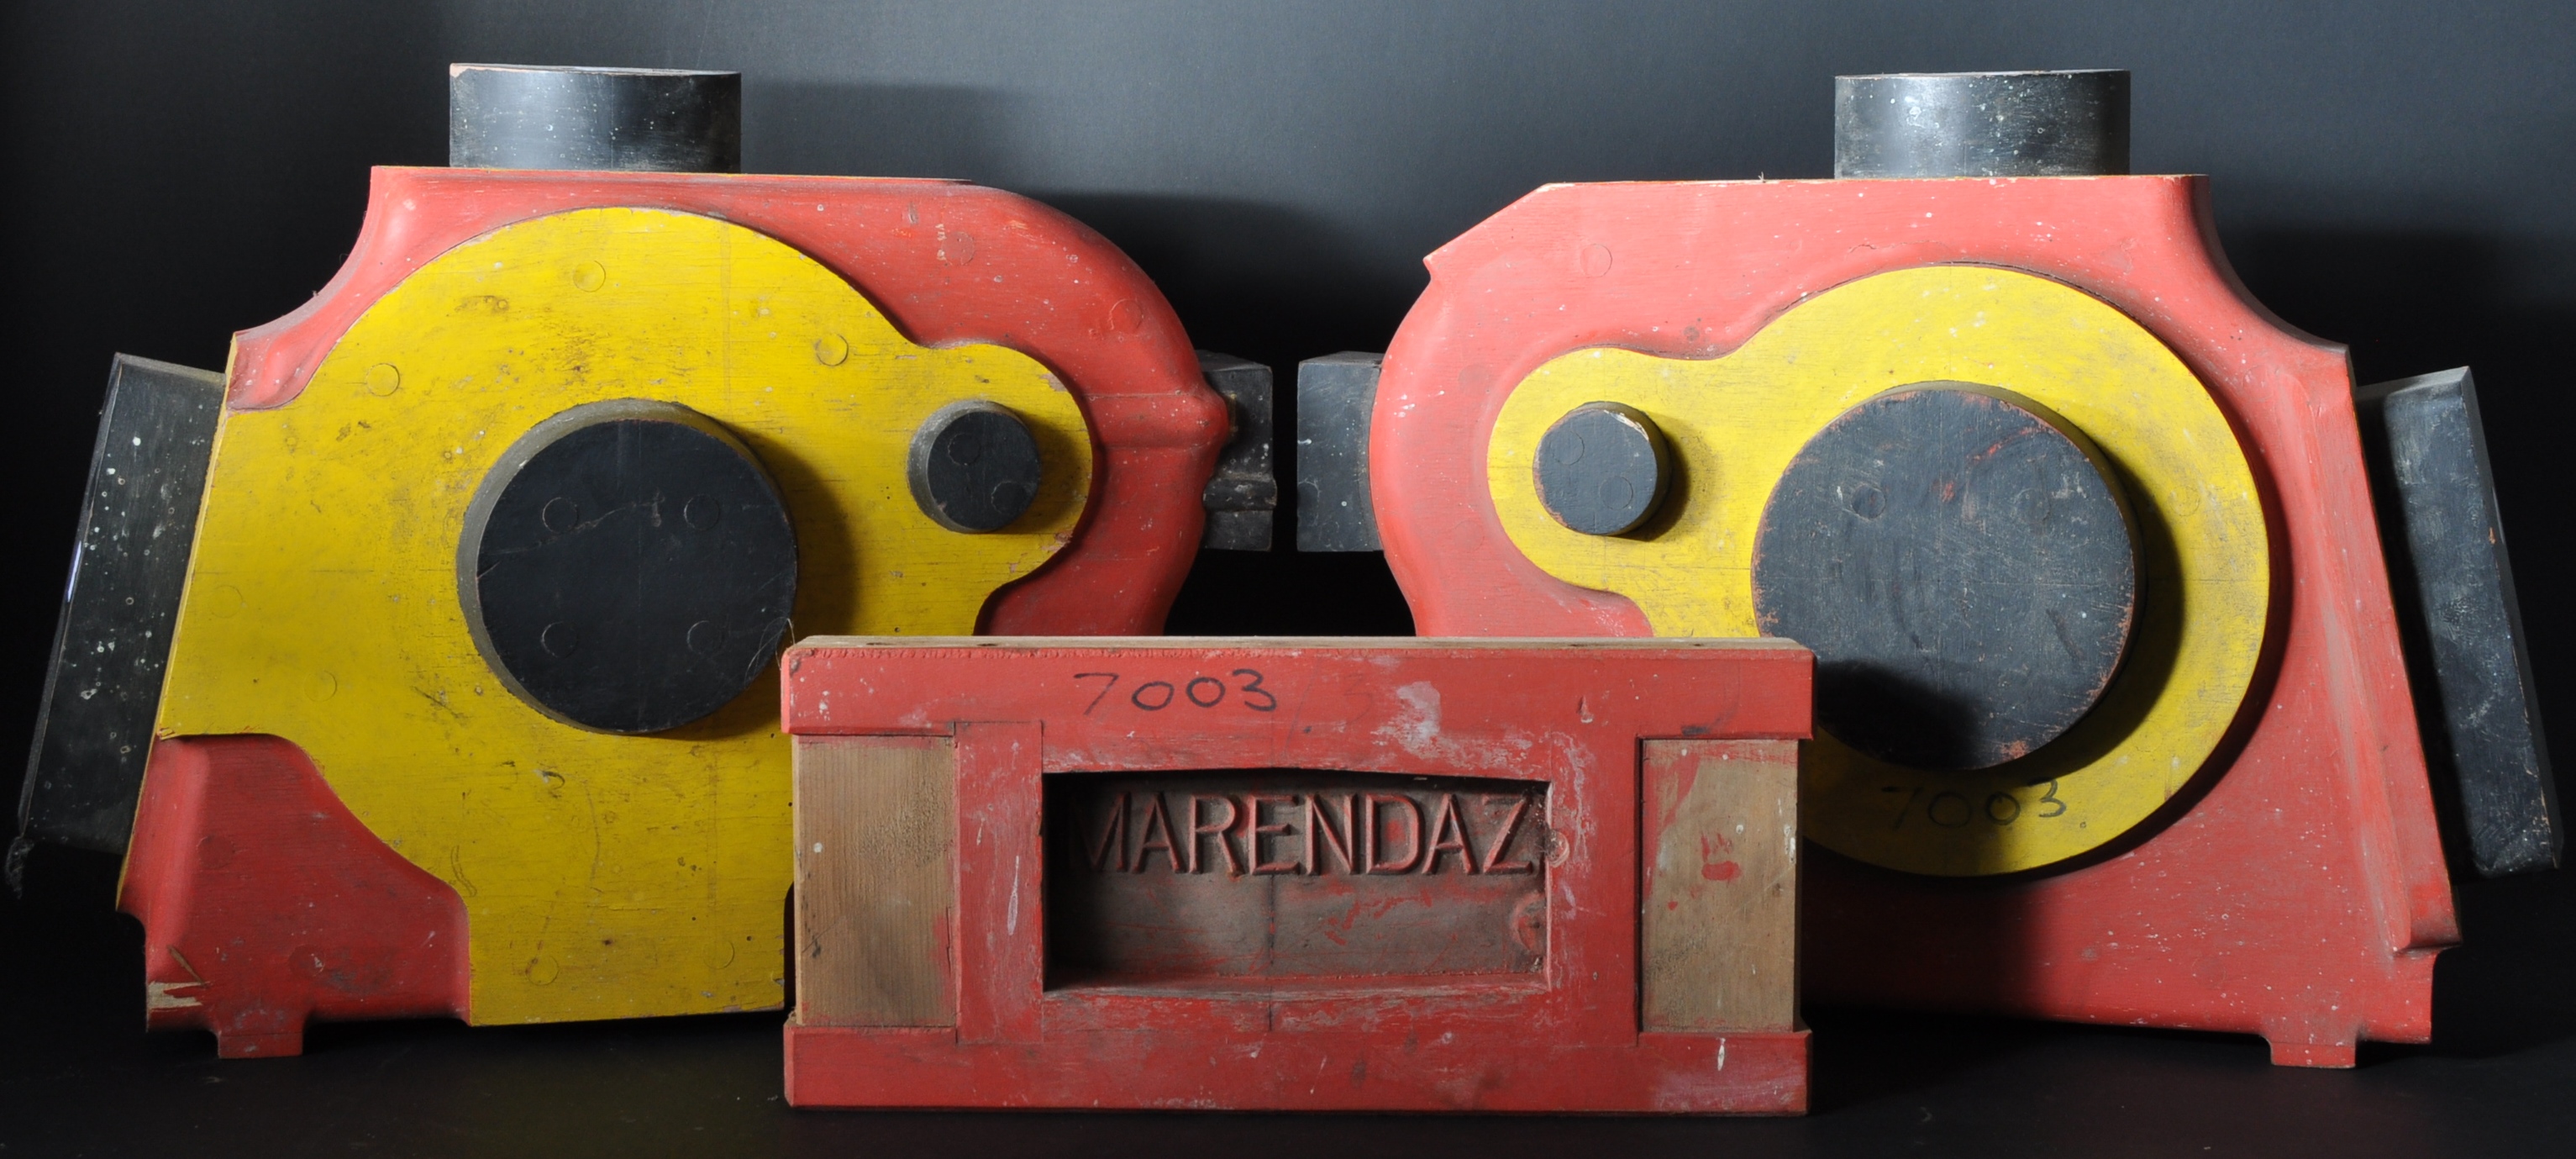 DMK MARENDAZ COLLECTION - ENGINE MOULDS & PHOTOGRAPHS - Image 3 of 11